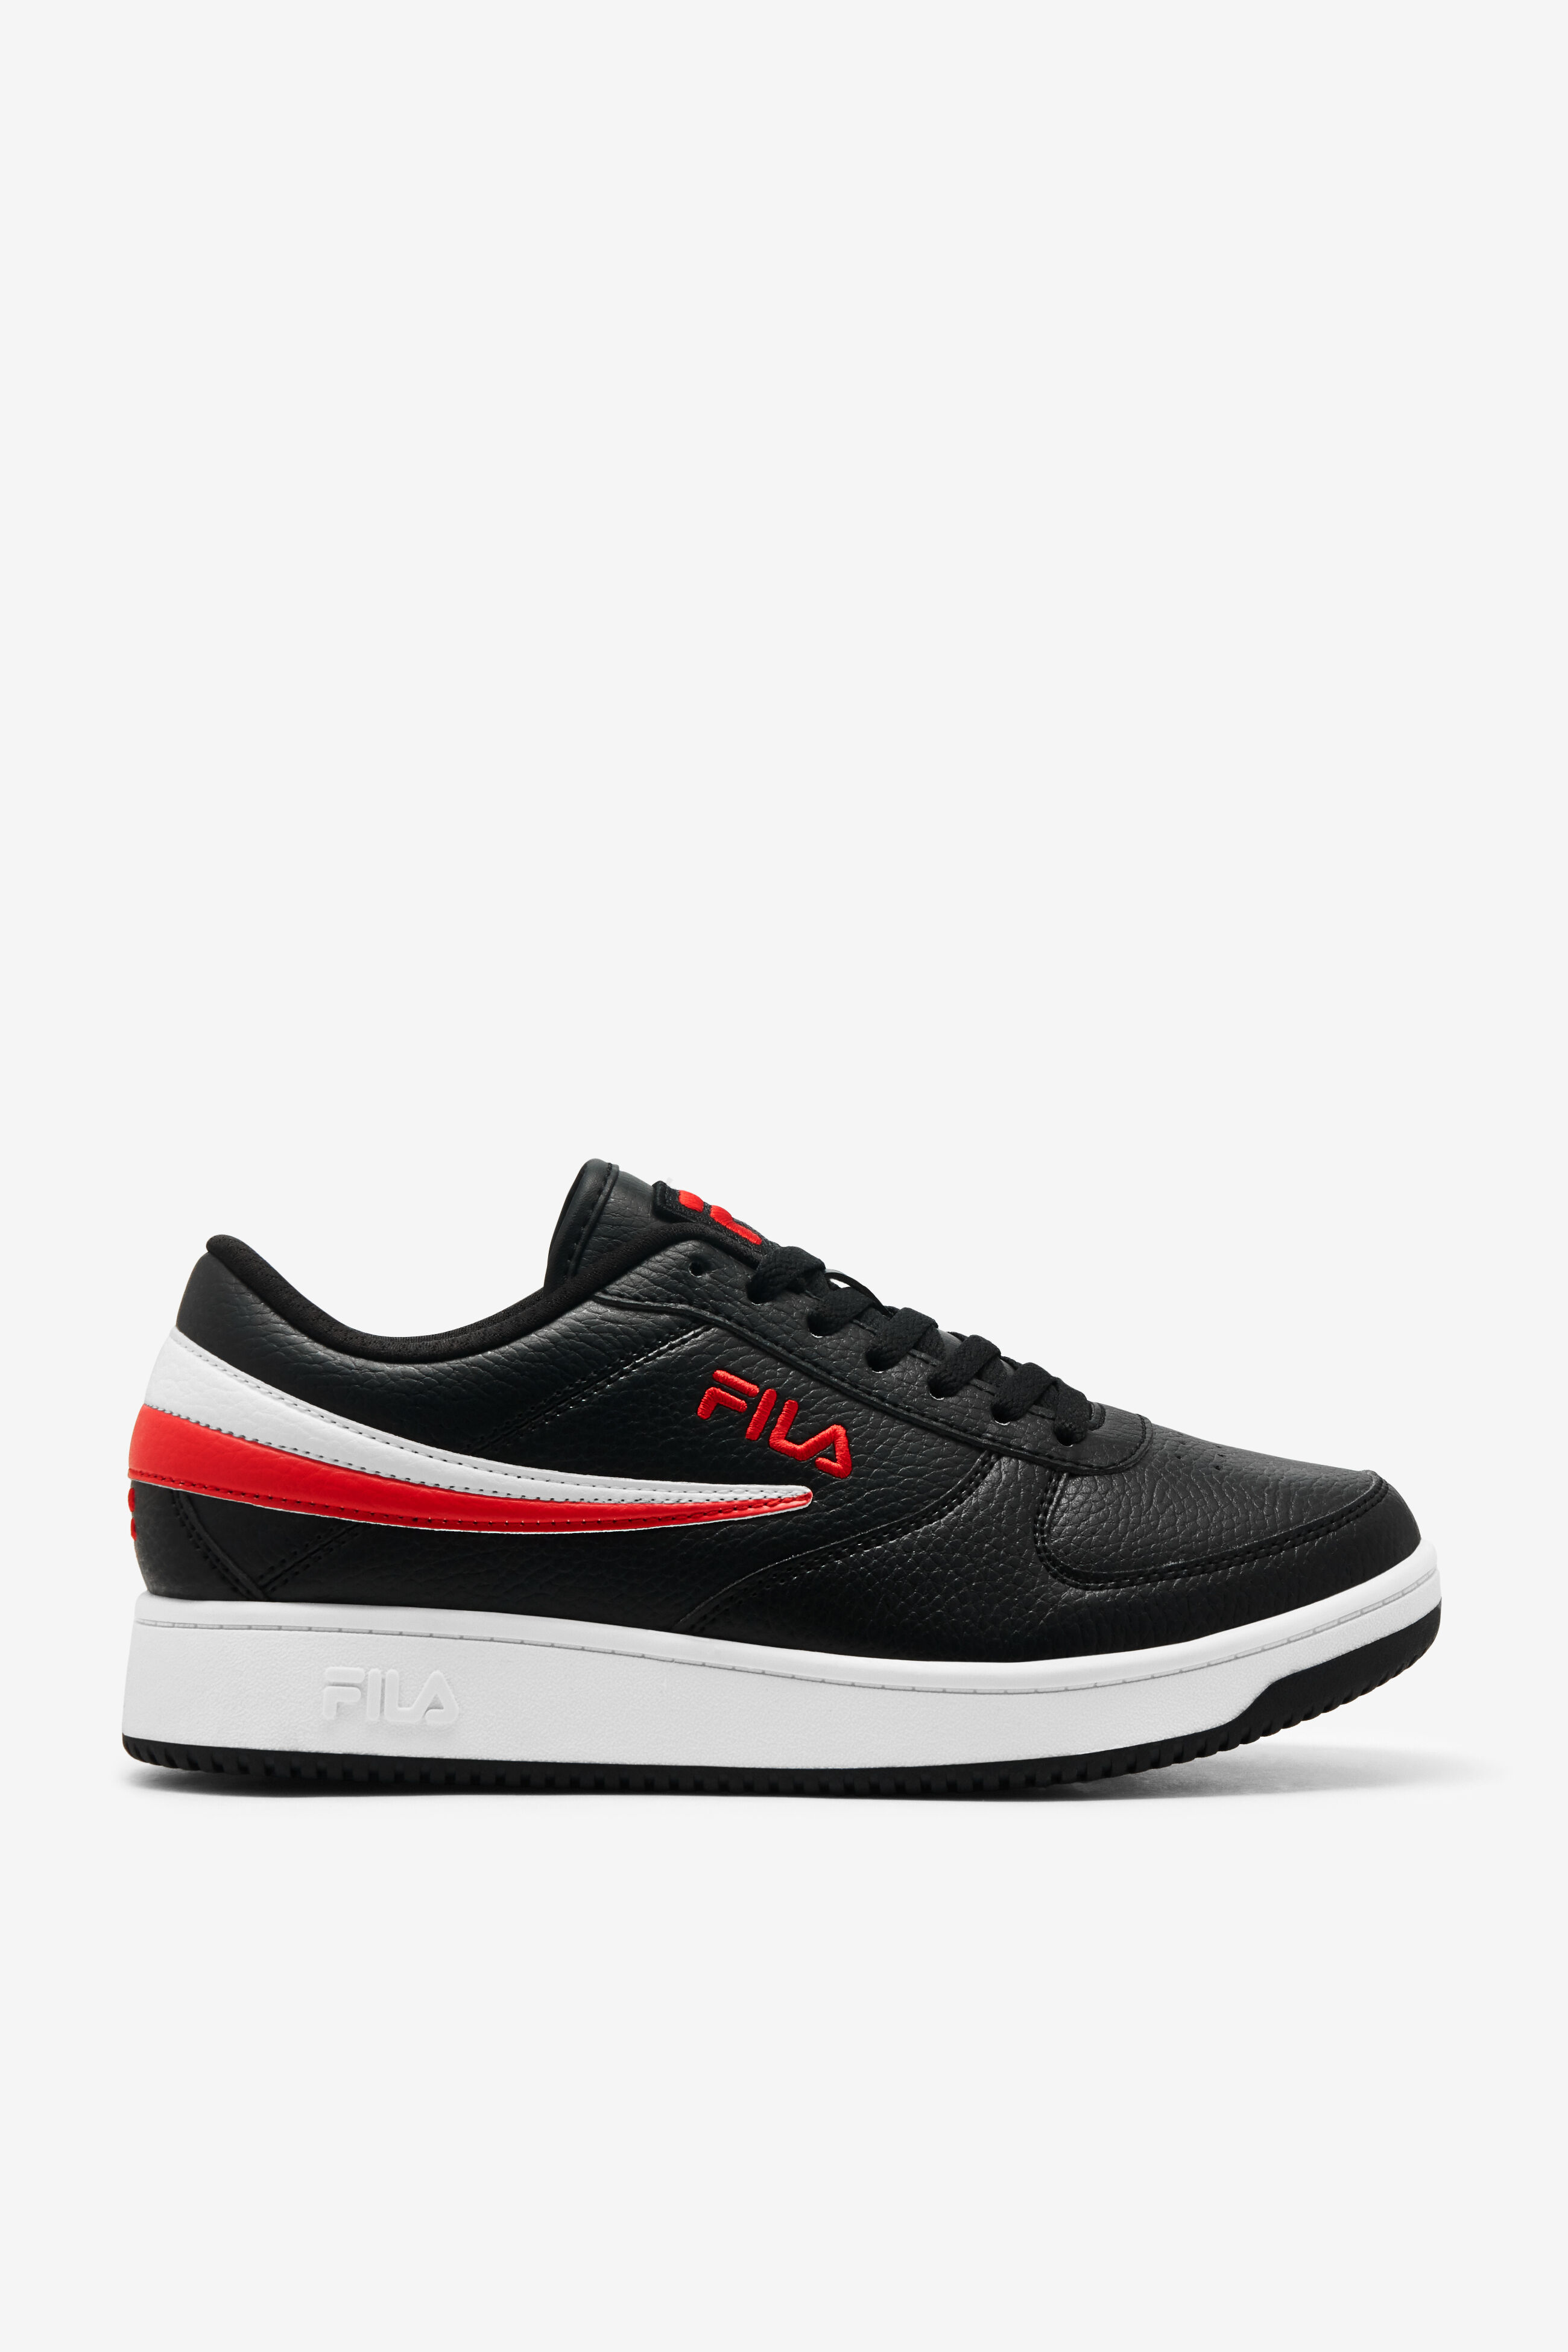 Fila Original Fitness Men's Shoes White-Black-Red – Sports Plaza NY